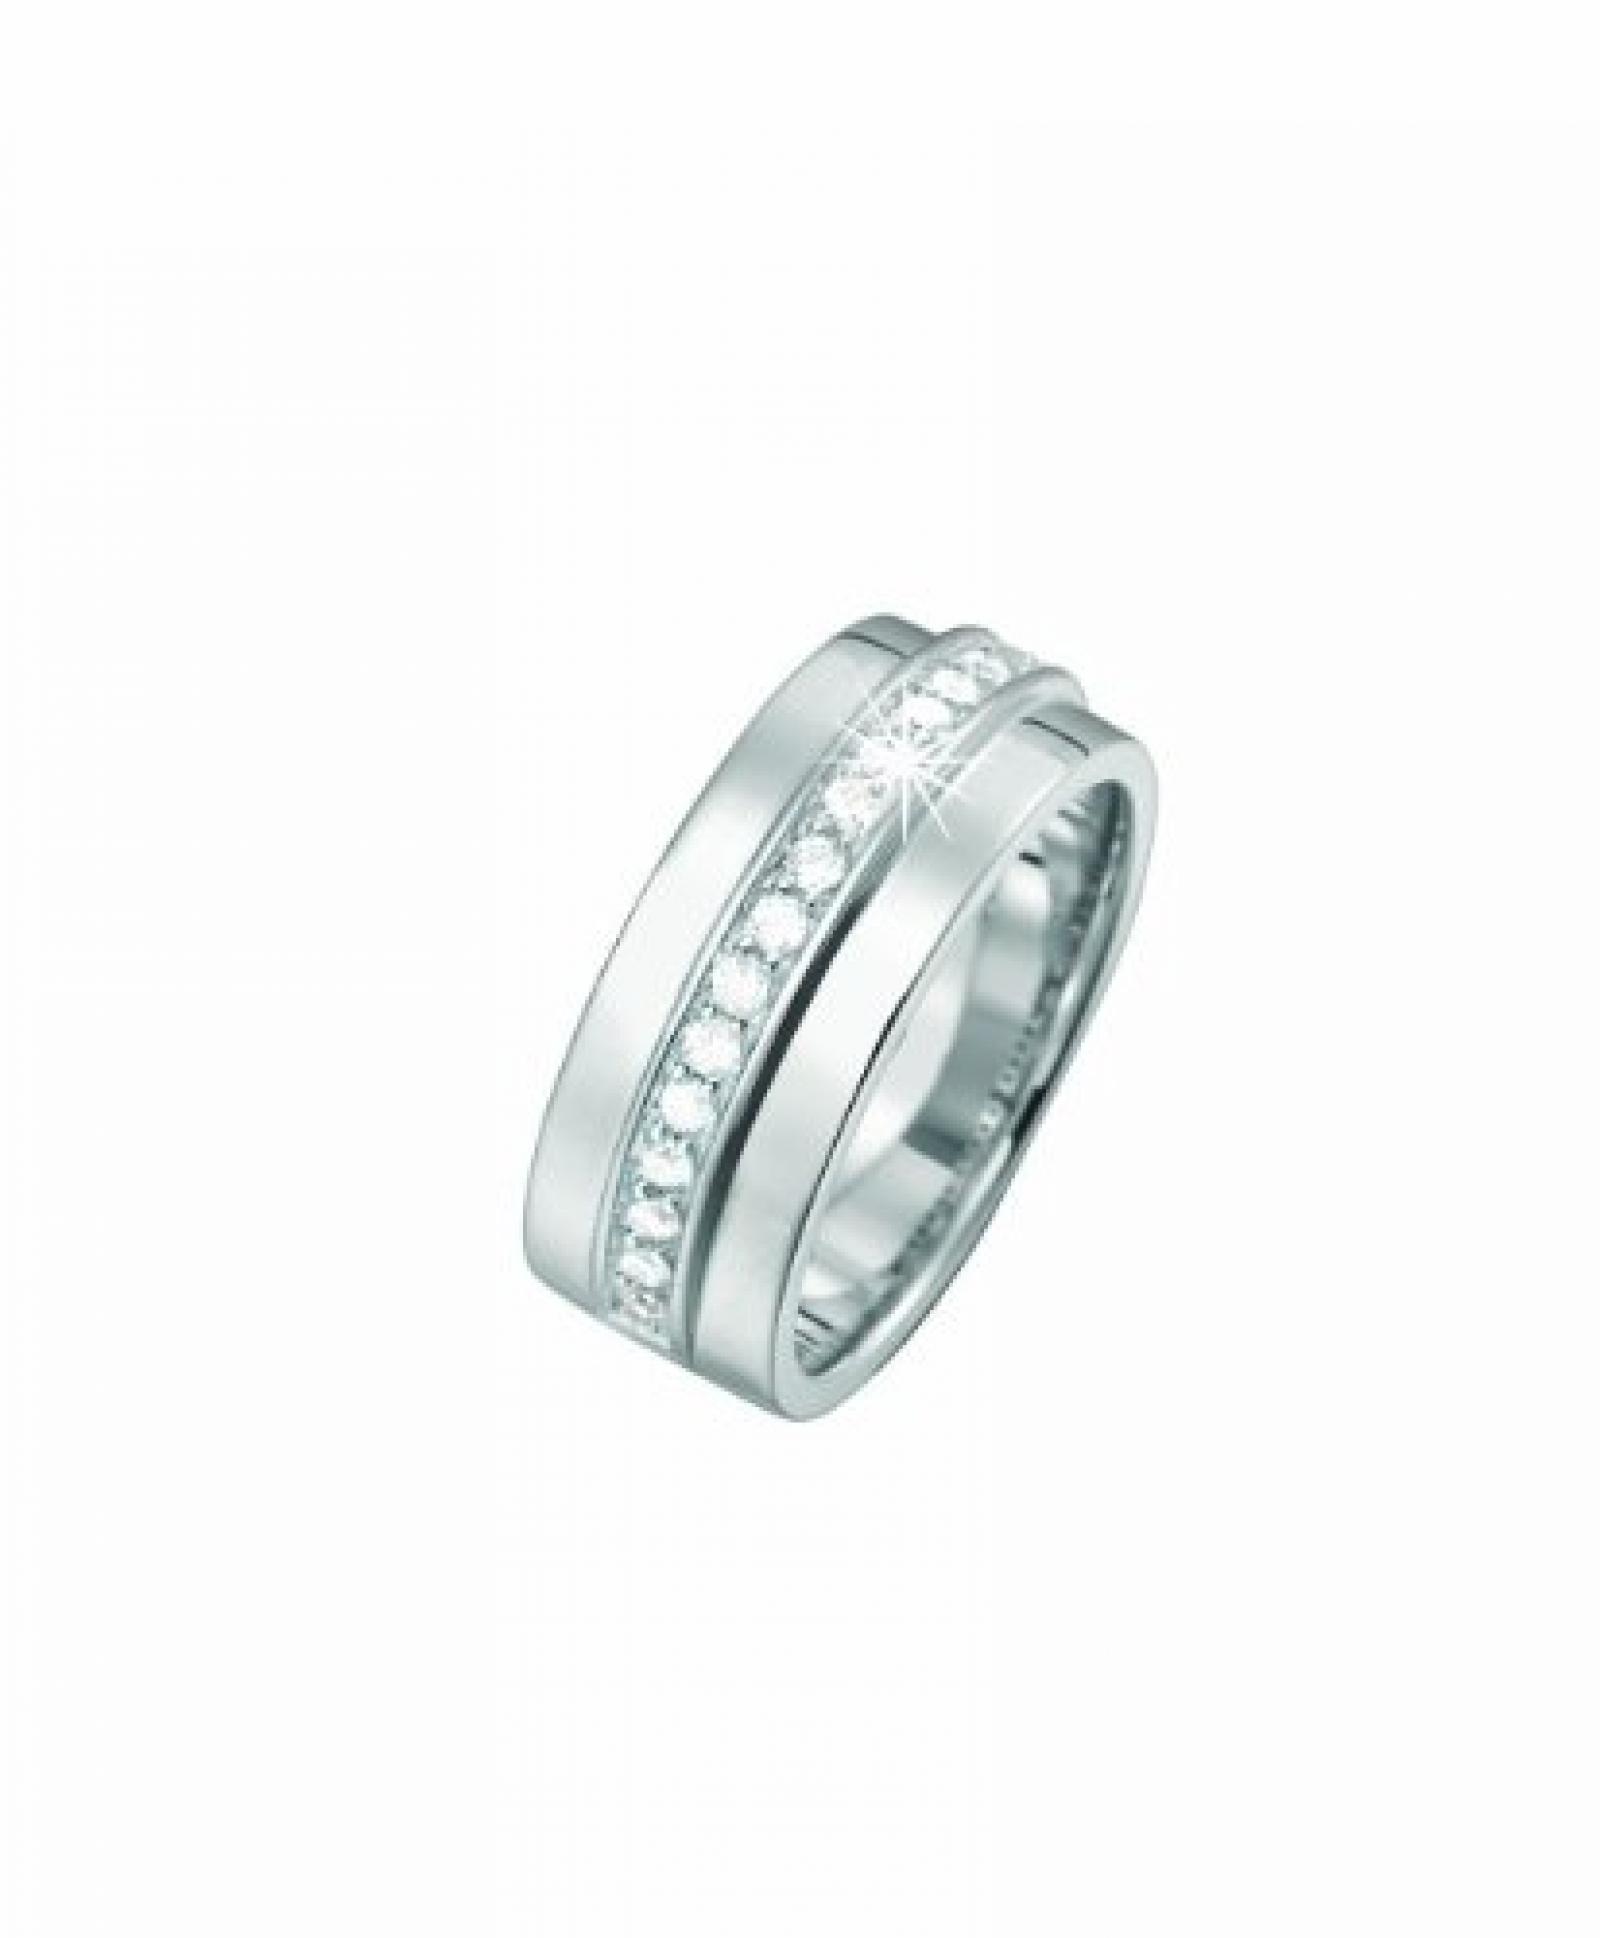 Pierre Cardin Damen-Ring Les Rondelles Sterling-Silber 925 PCRG90221A 